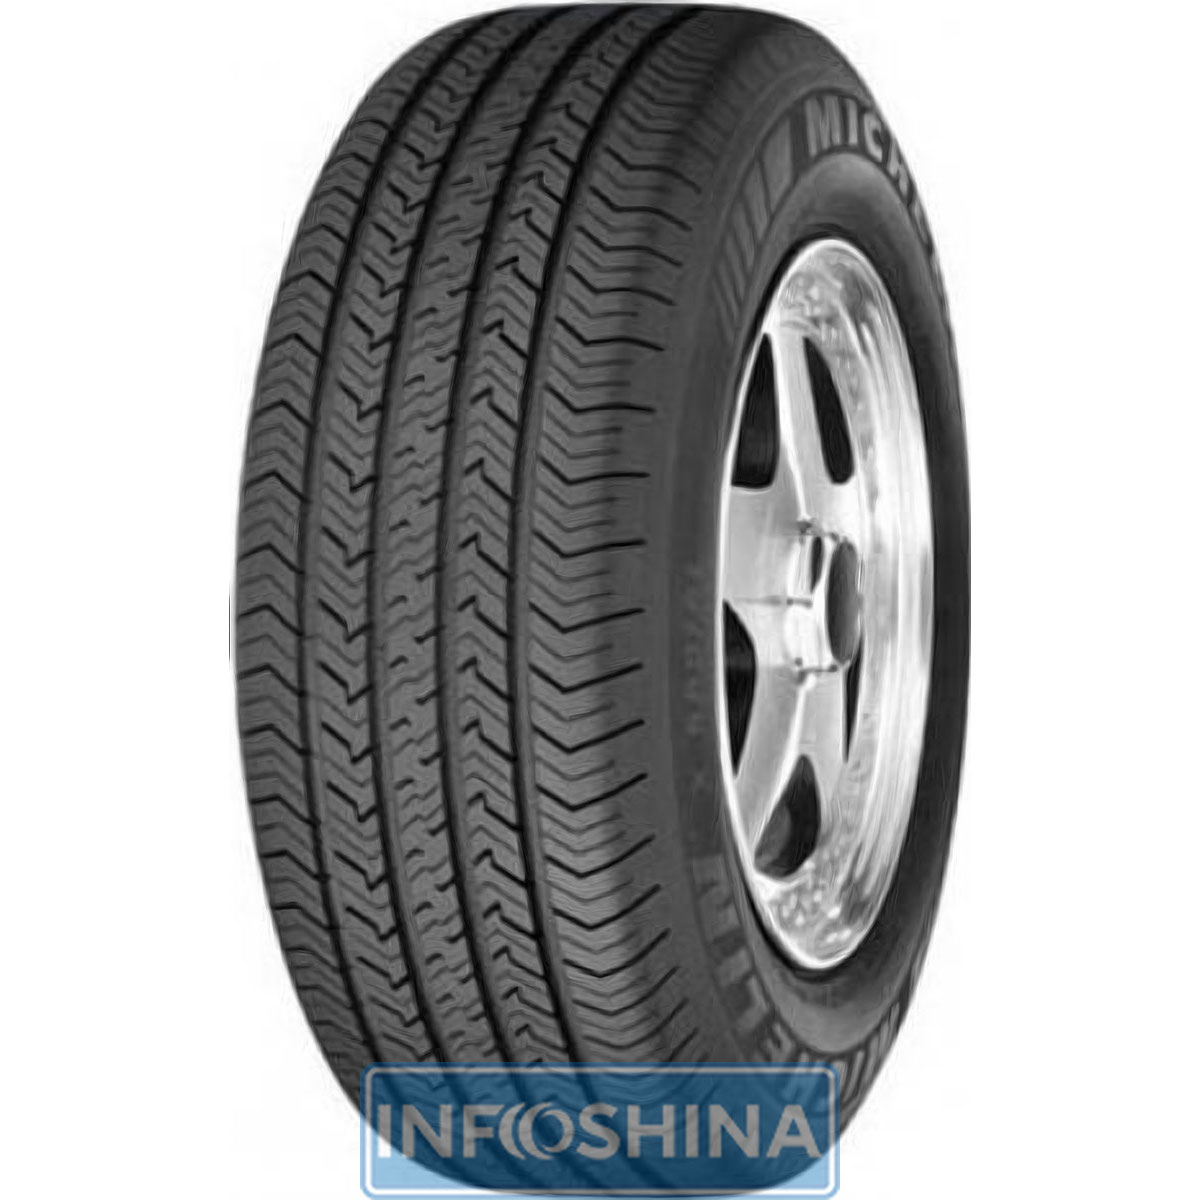 Купить шины Michelin X-Radial DT 205/60 R16 91T